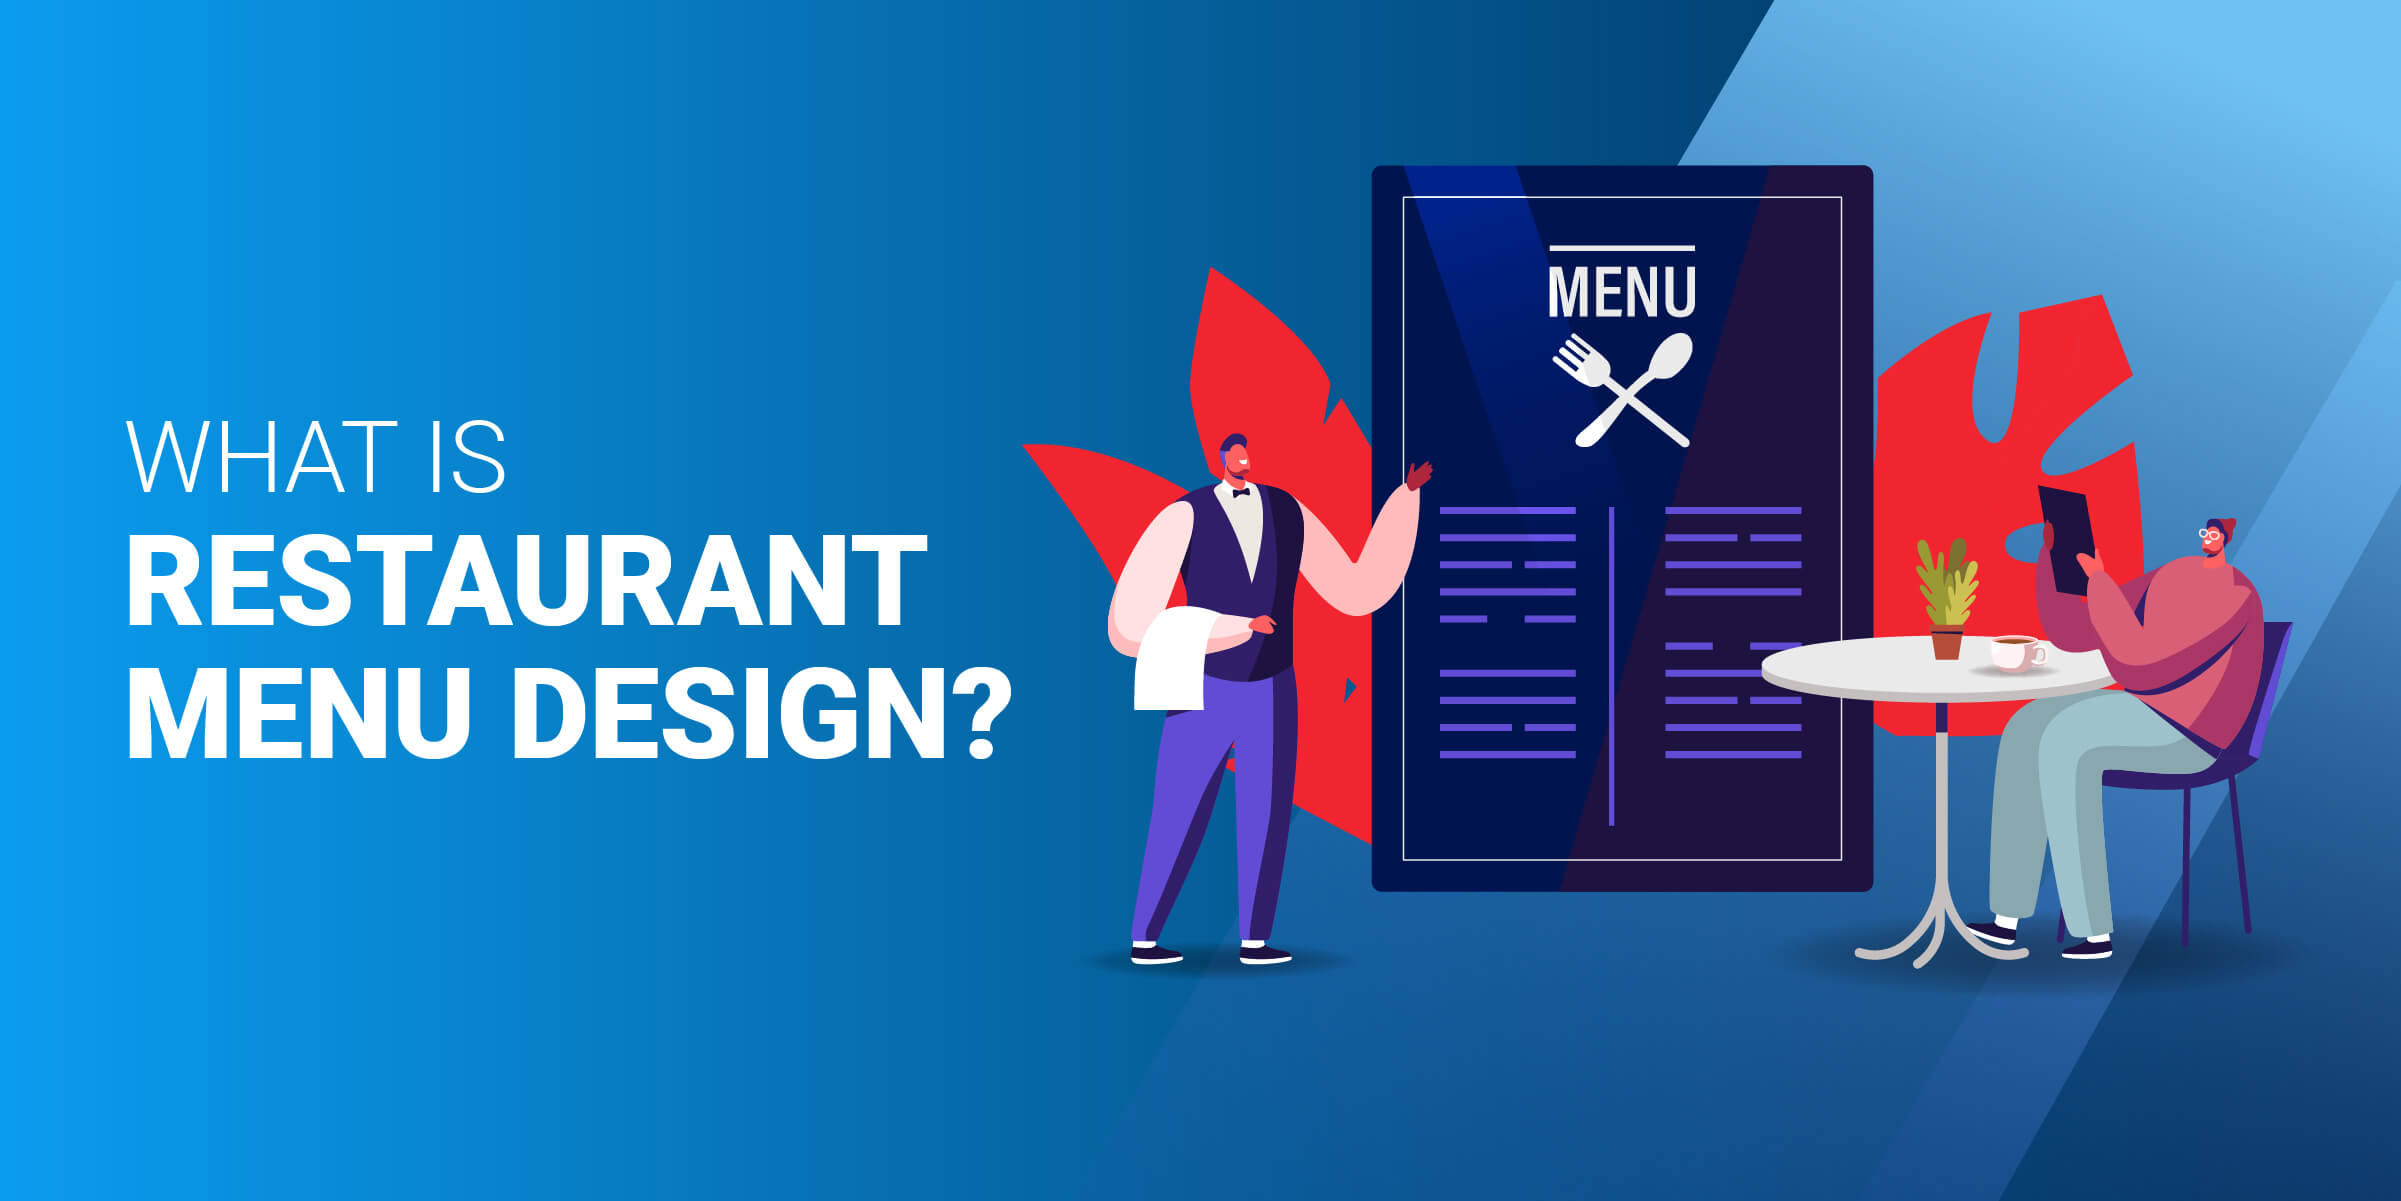 What is Restaurant Menu Design